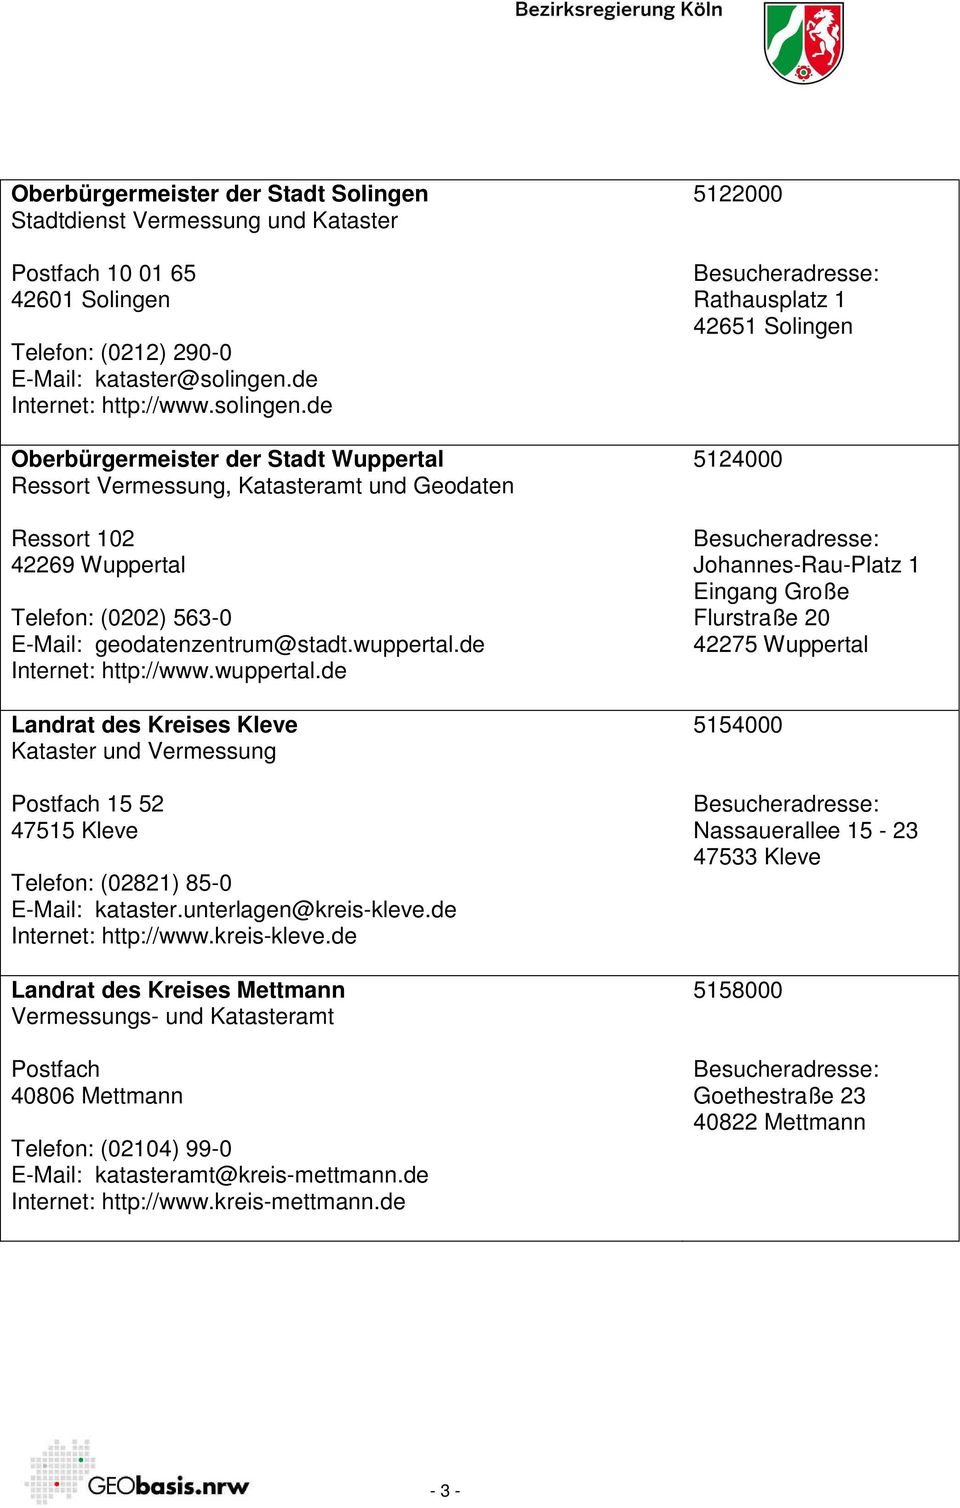 wuppertal.de Internet: http://www.wuppertal.de Landrat des Kreises Kleve Kataster und Vermessung 15 52 47515 Kleve Telefon: (02821) 85-0 E-Mail: kataster.unterlagen@kreis-kleve.